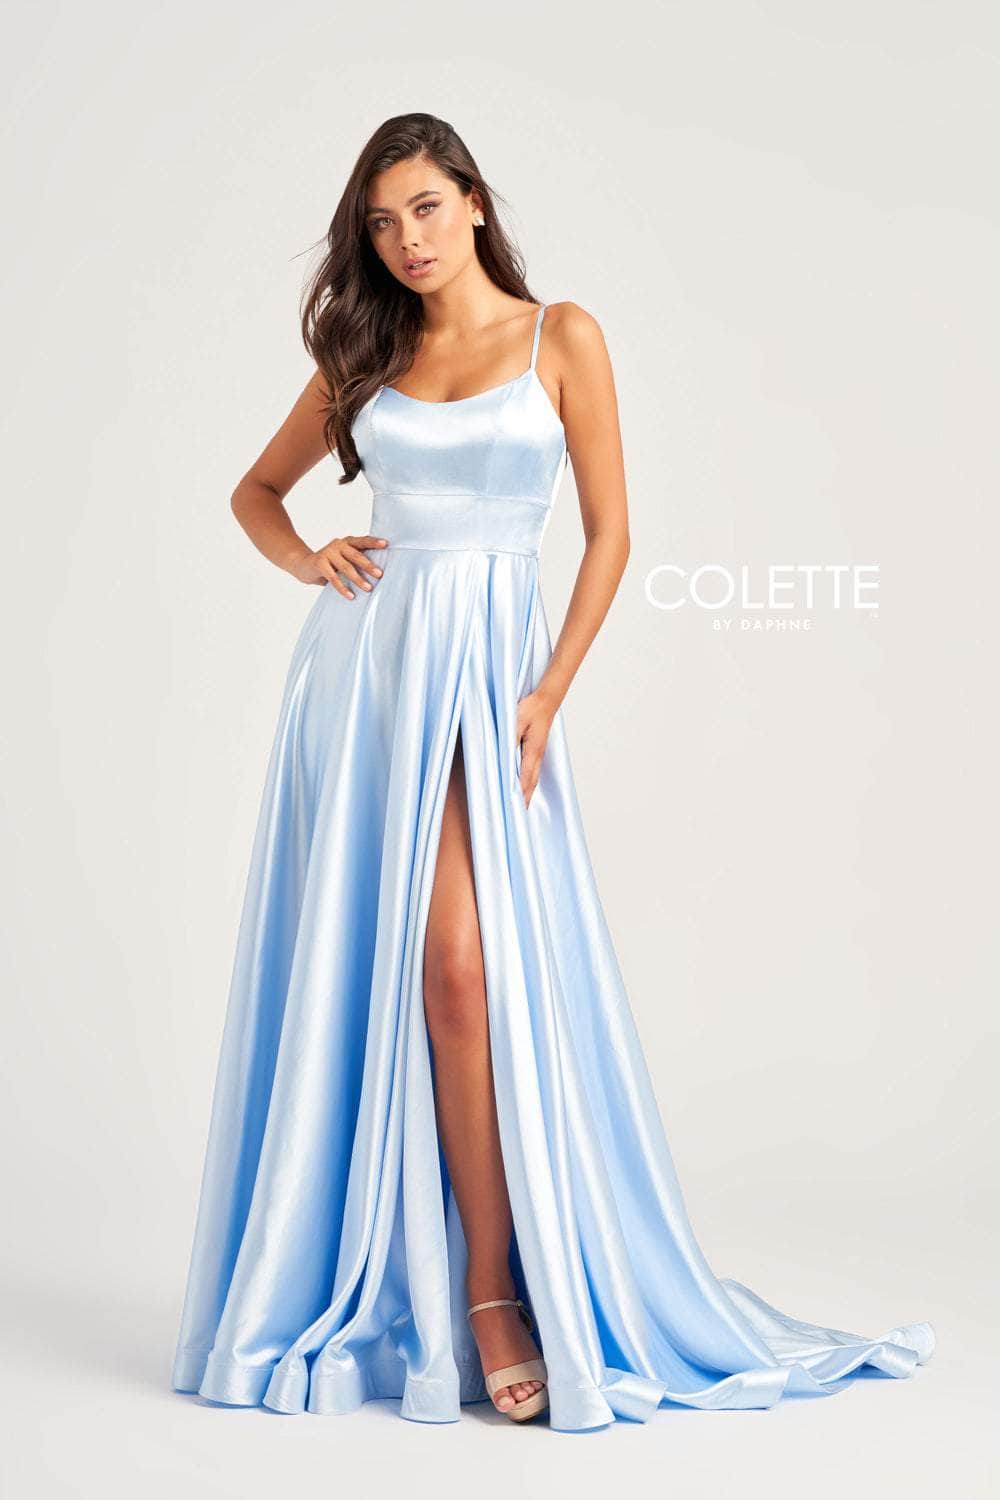 Colette By Daphne CL5283 - Scoop Neck A-Line Prom Dress